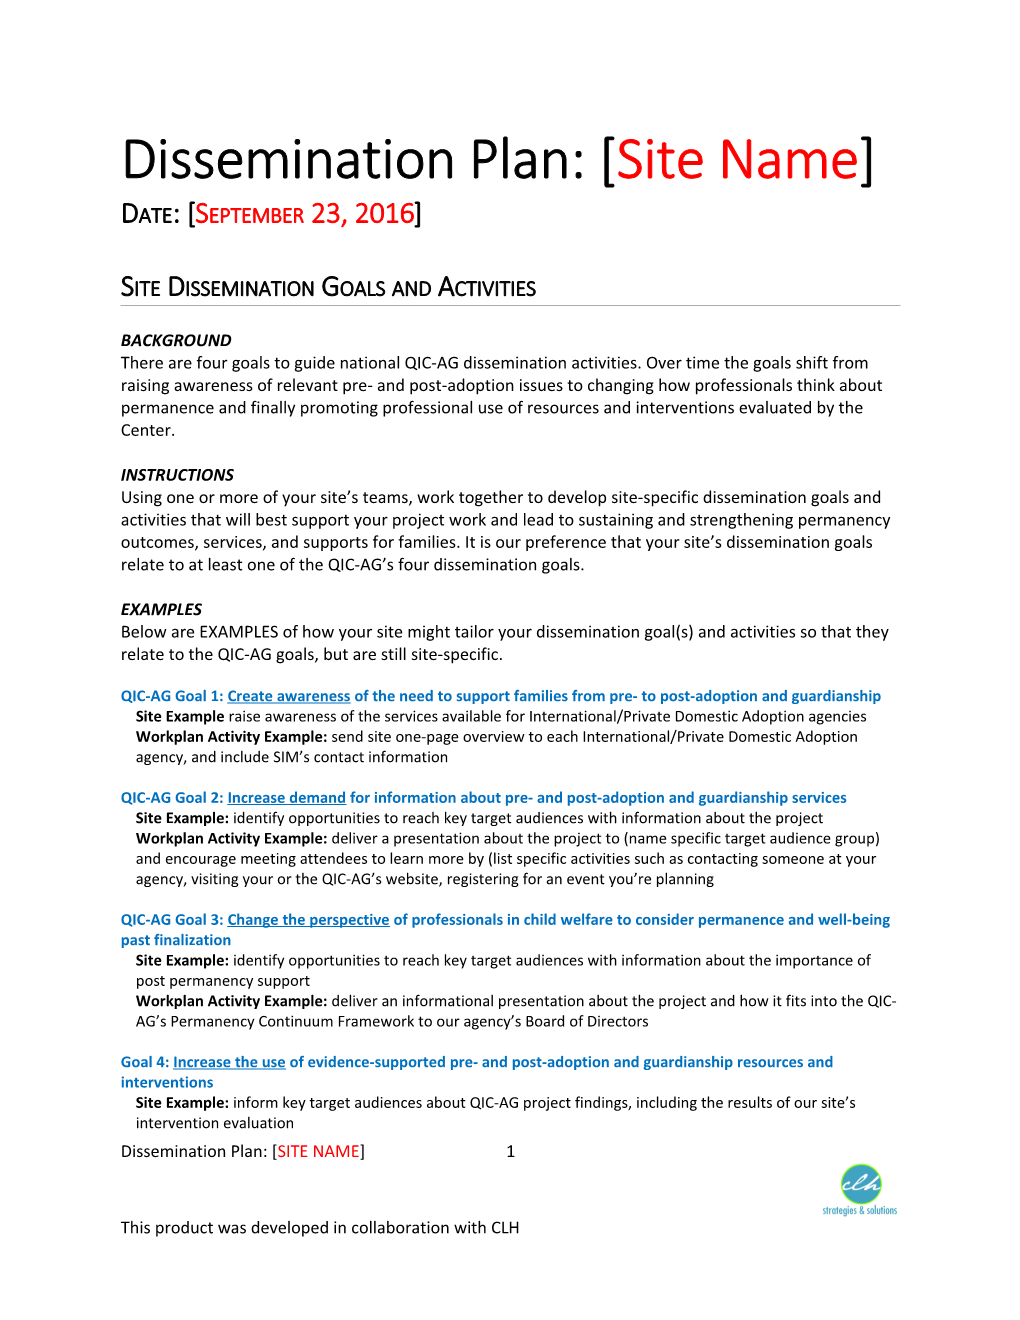 Site Dissemination Goals and Activities